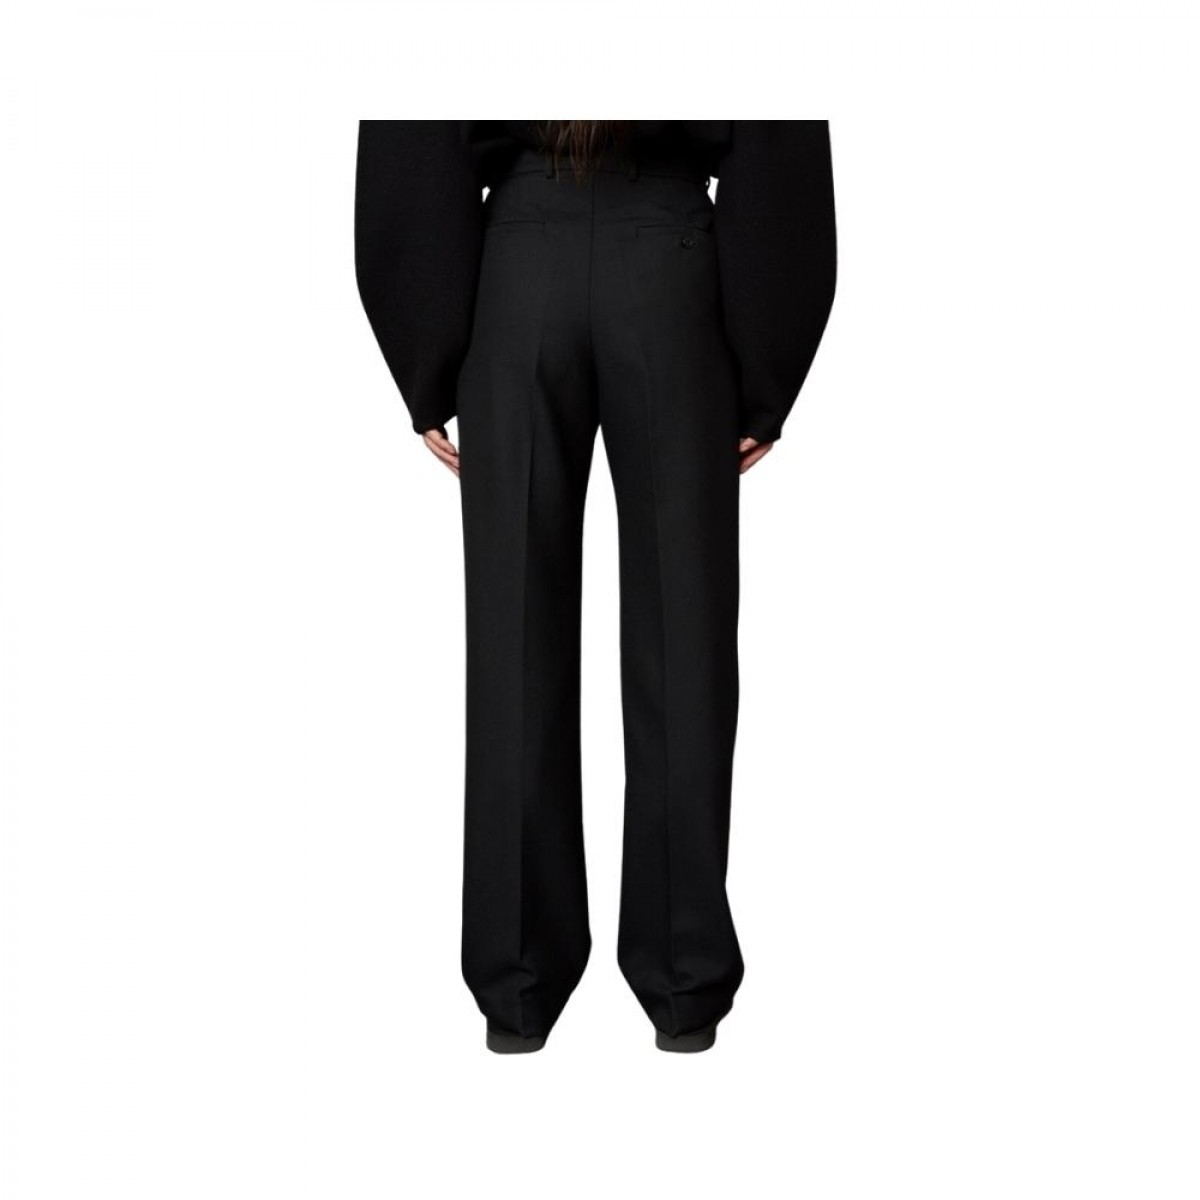 keen trousers - black - model bag